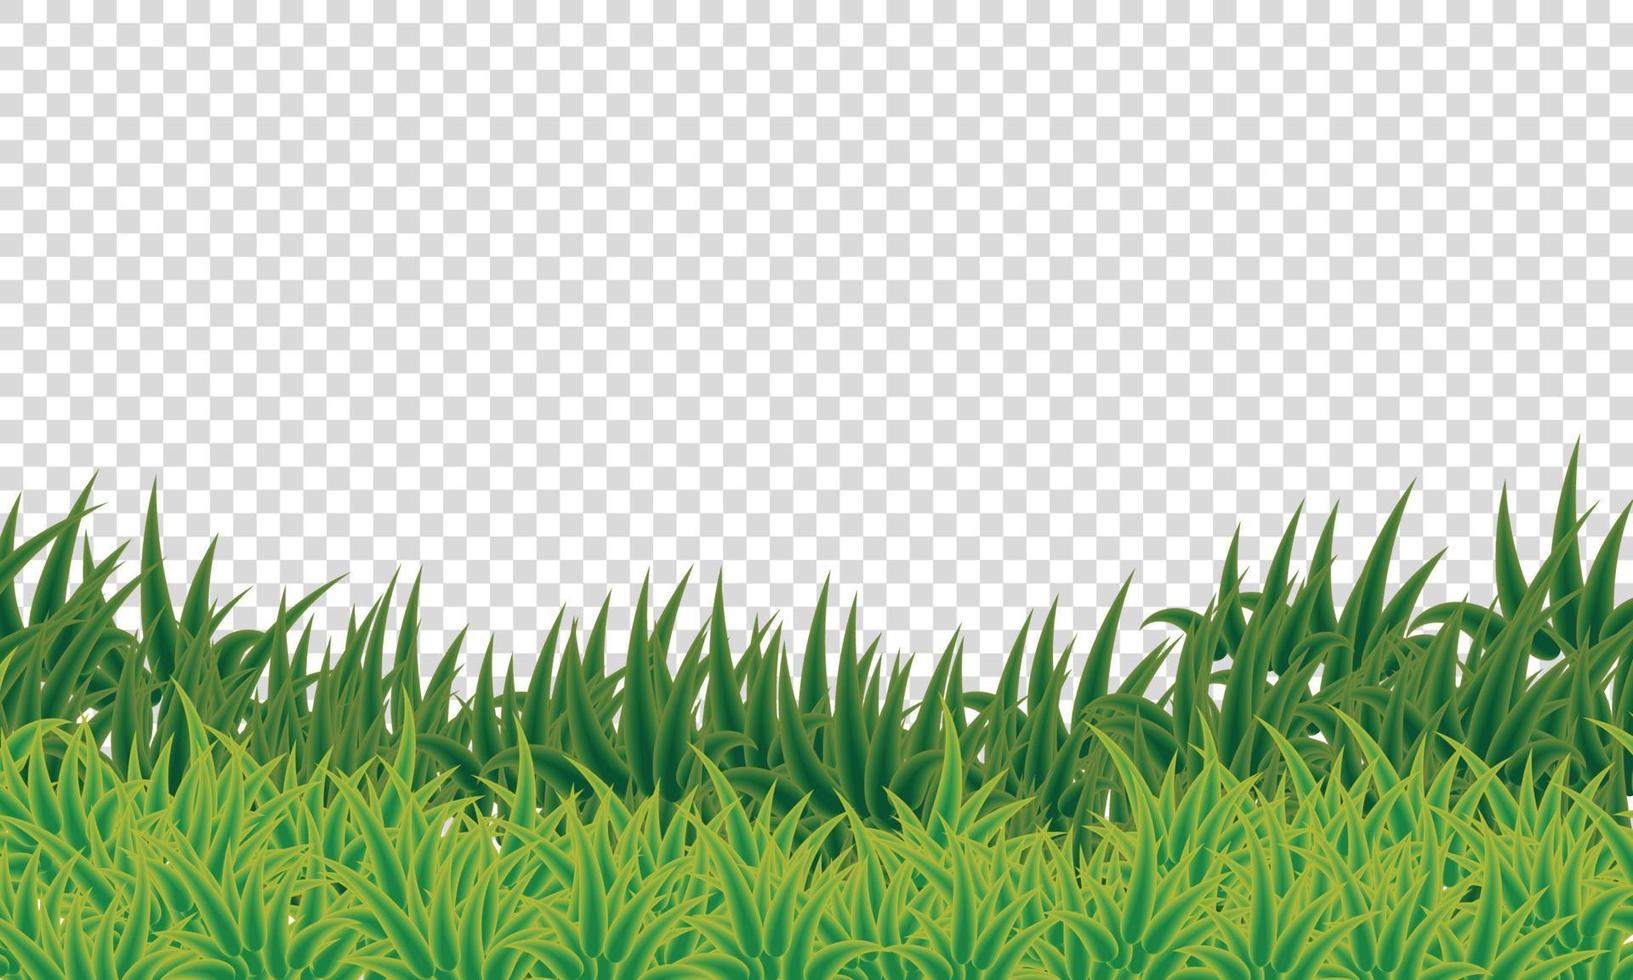 groen gras transparante achtergrond vector